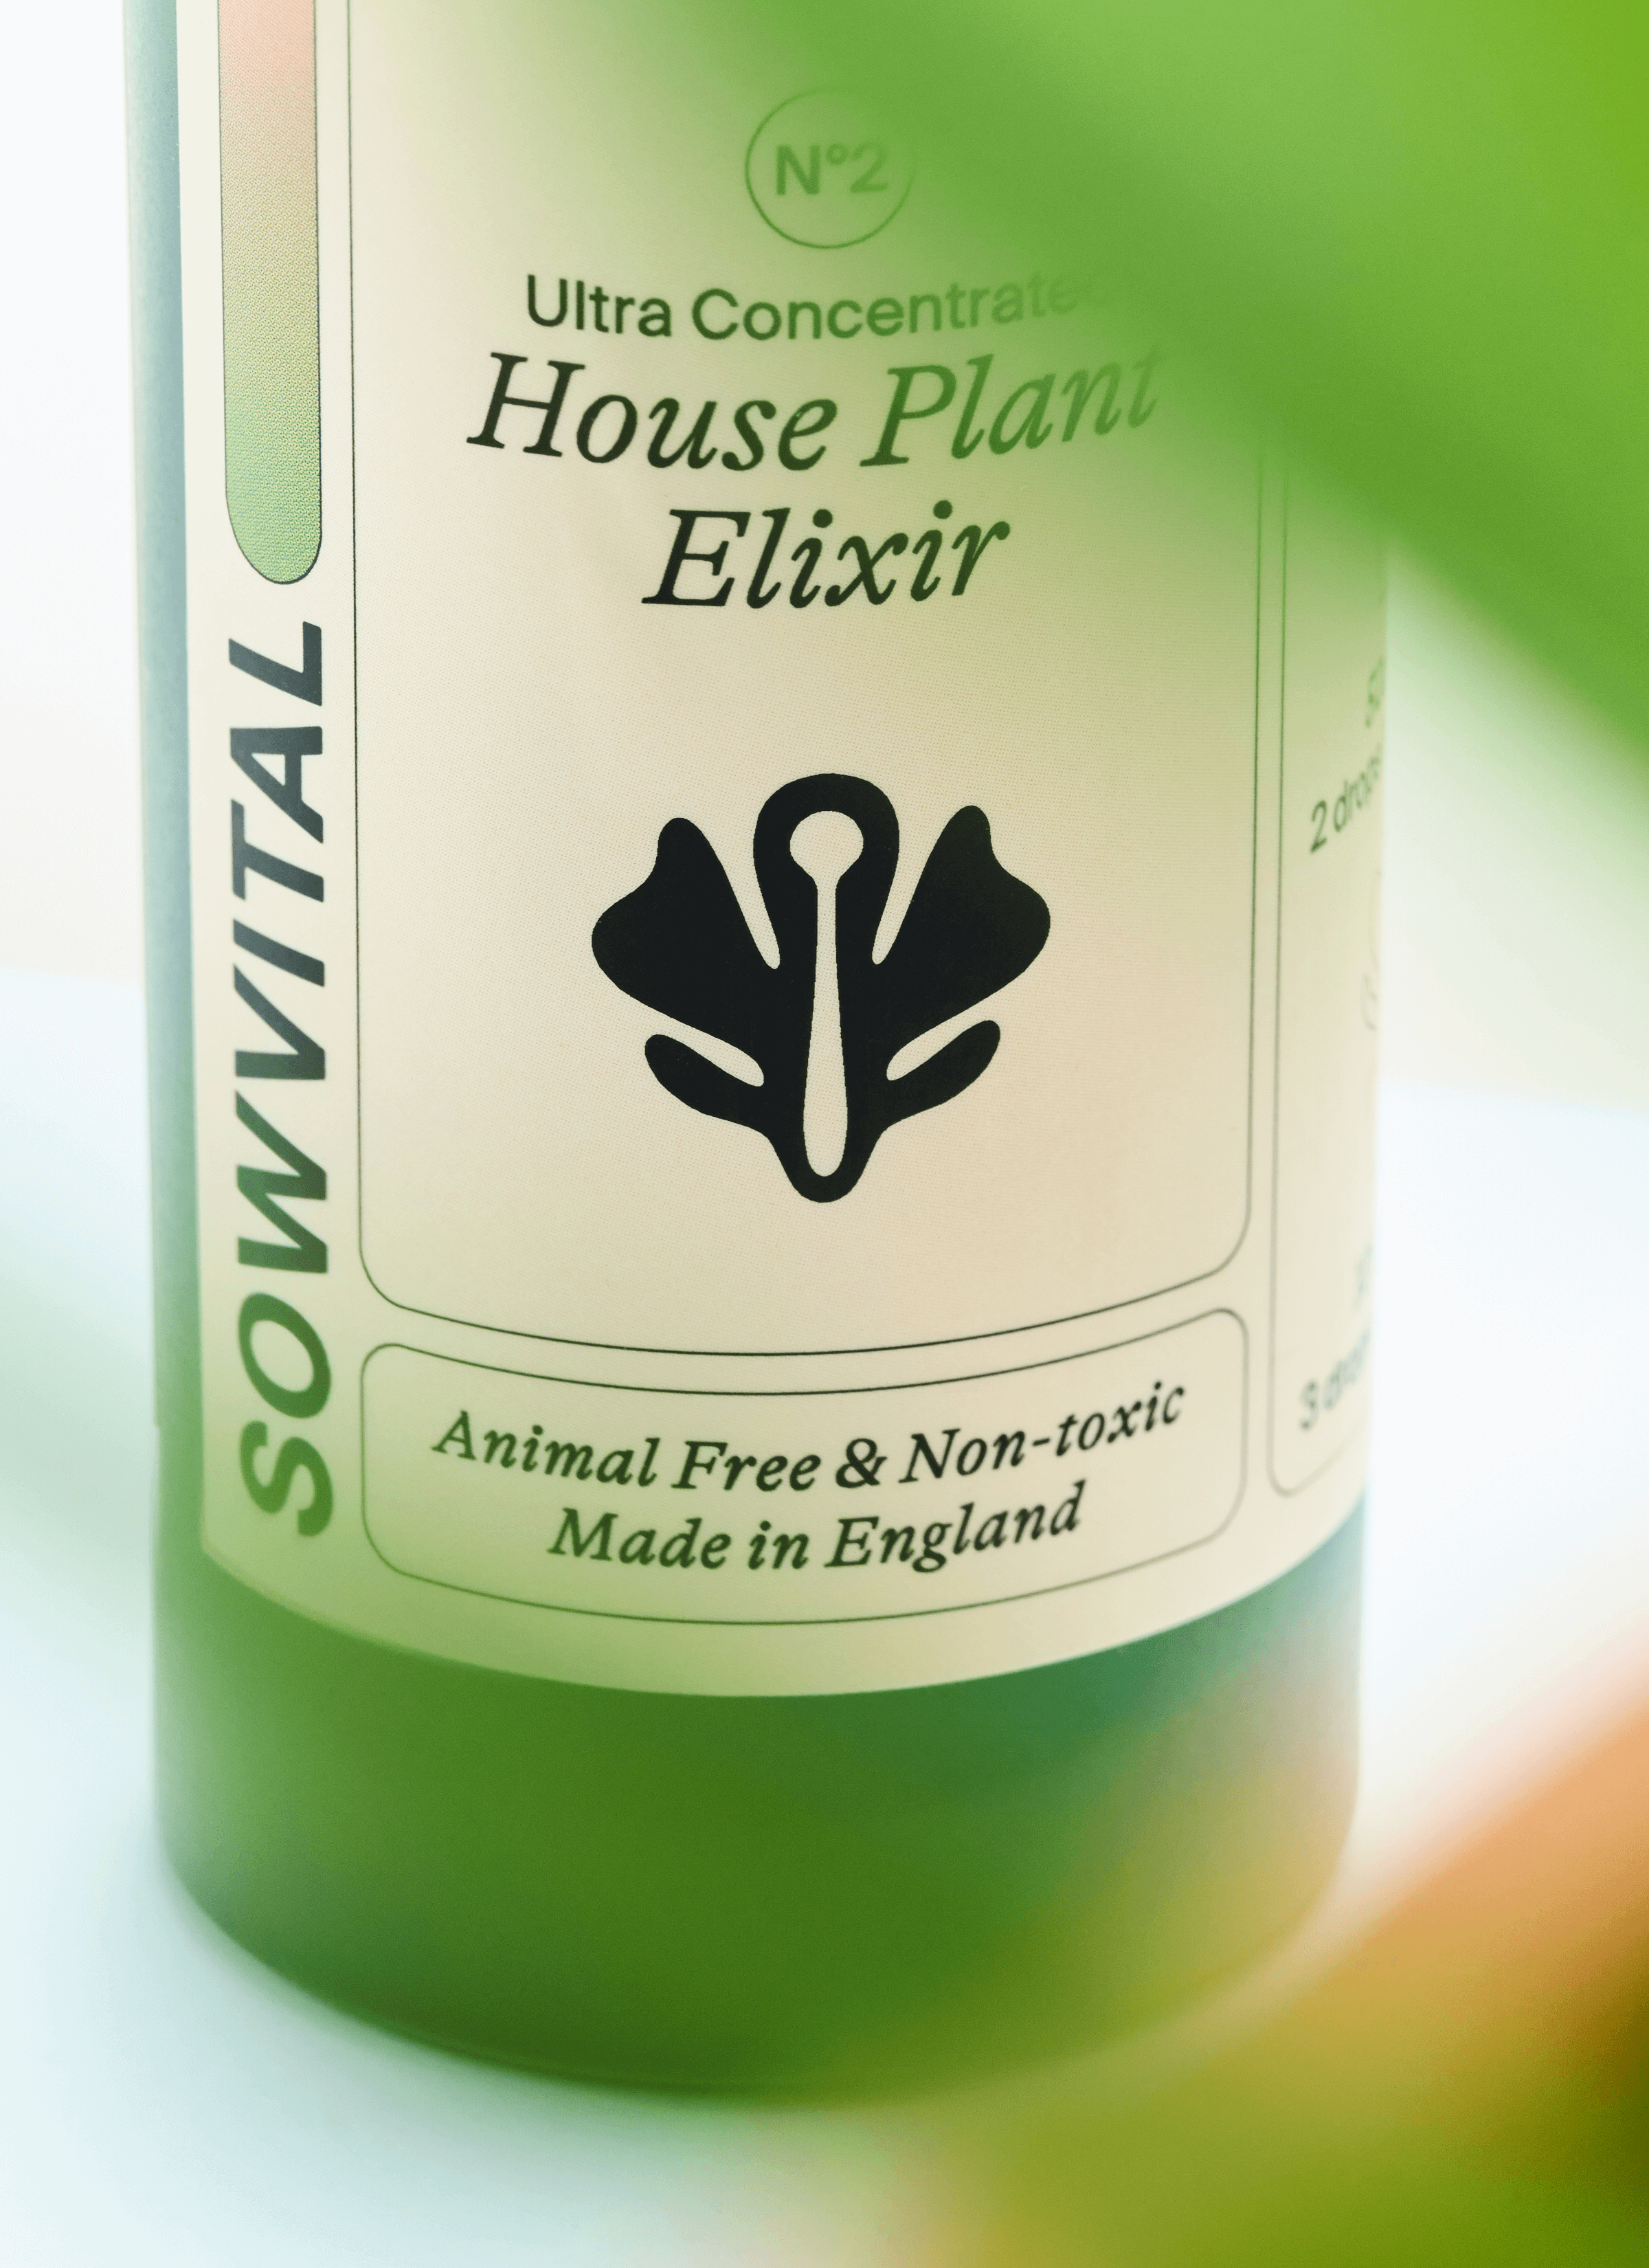 Sowvital house plant product - House plant elixir photoshoot.